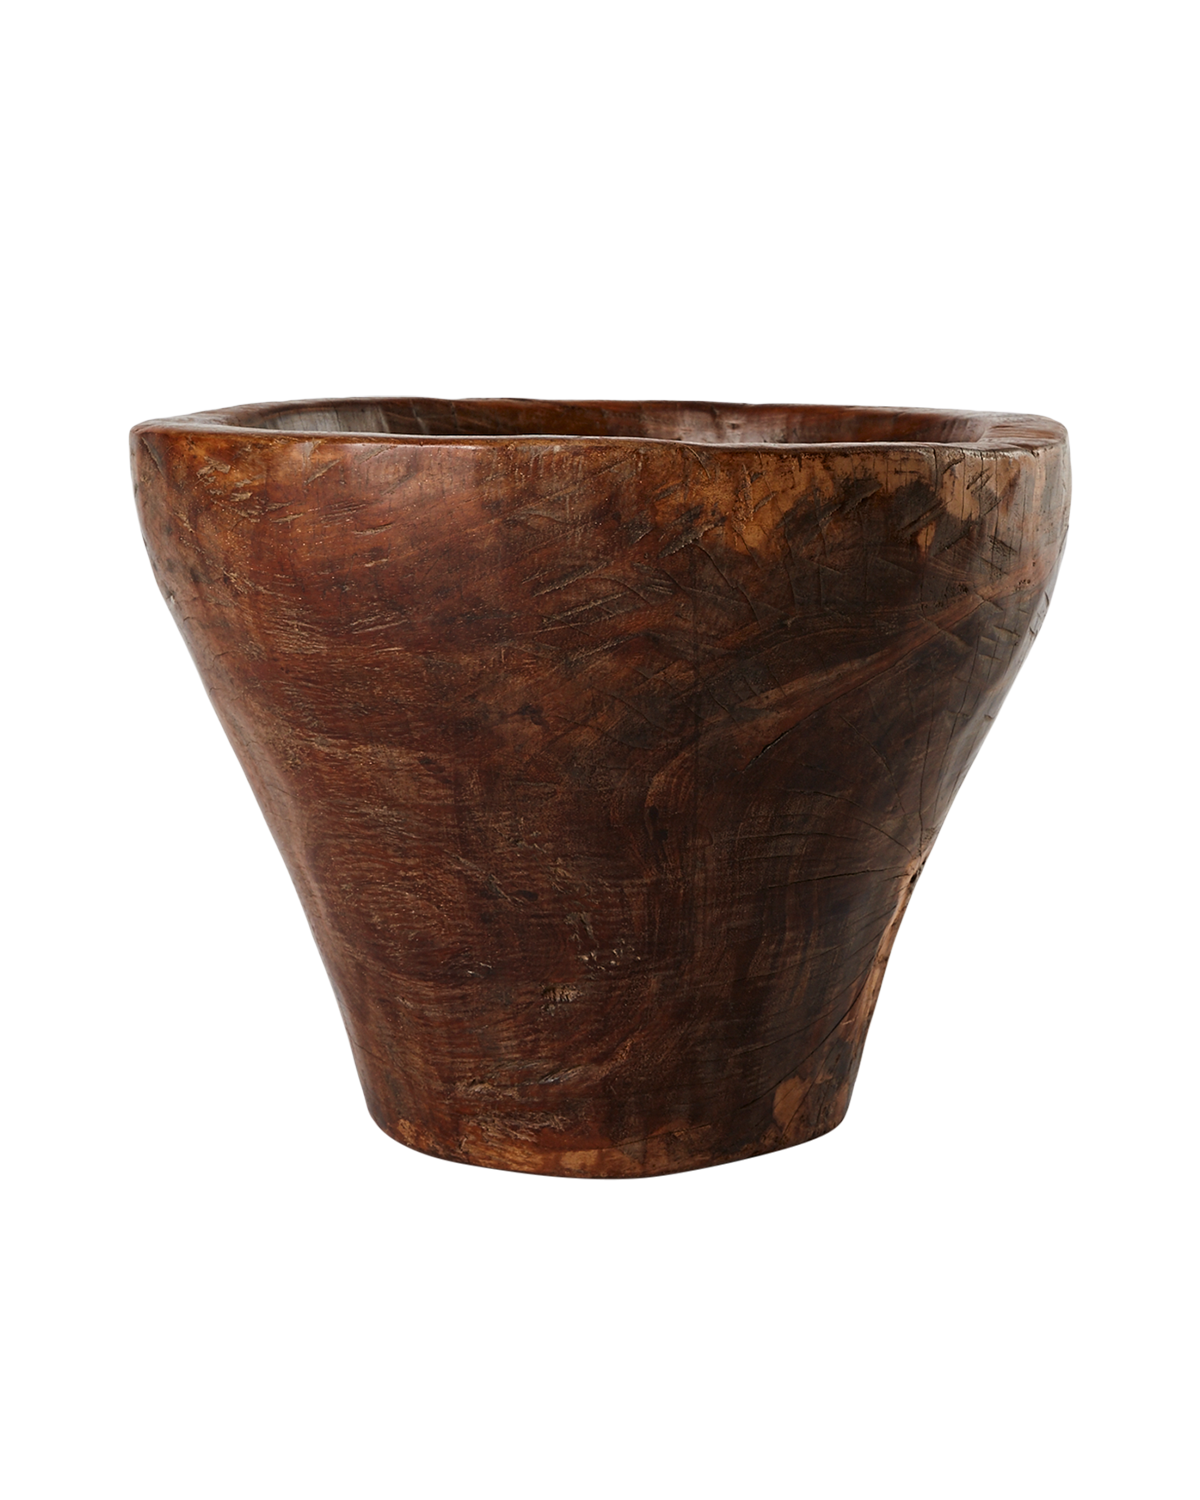 Sumatra Bowl